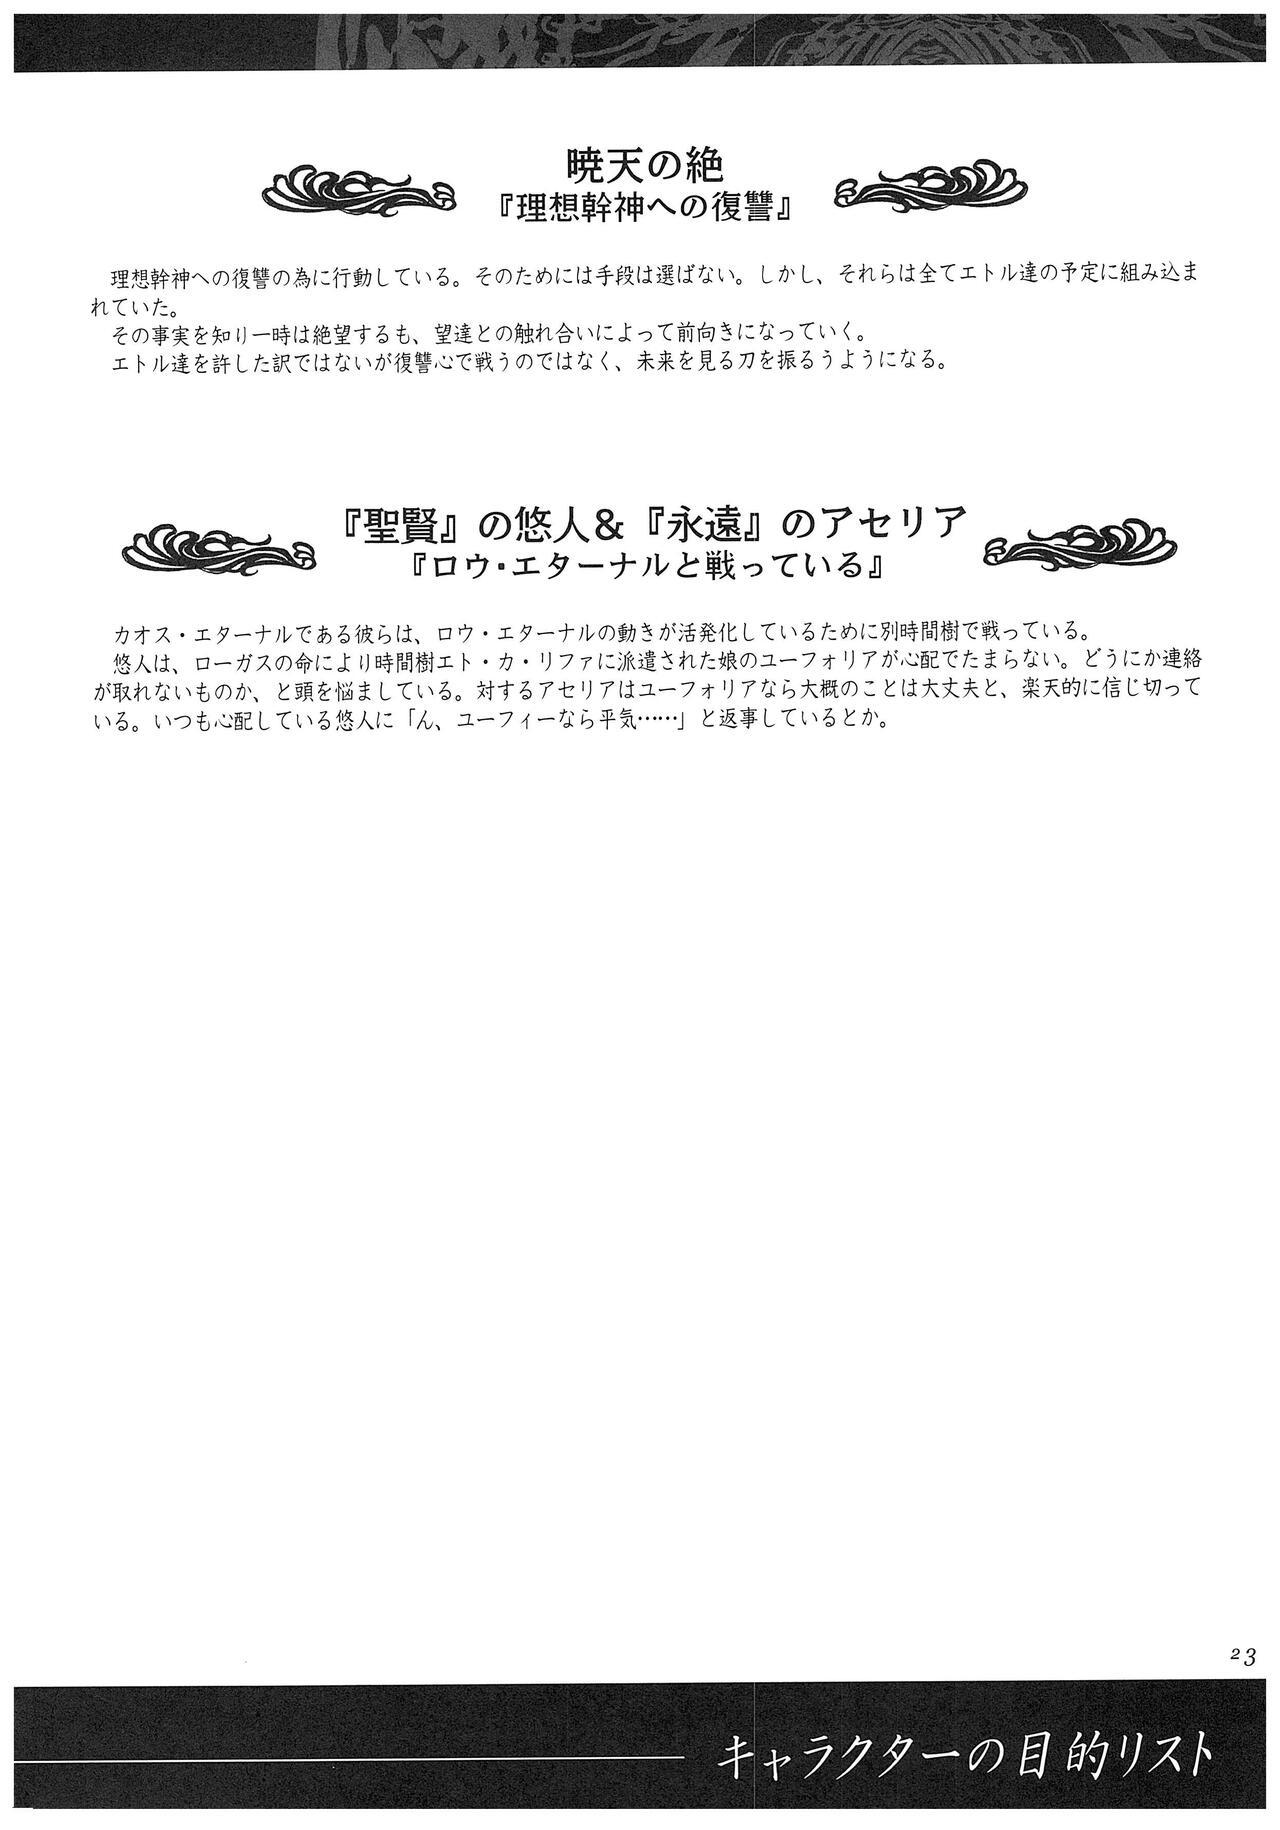 Seinarukana - offical ArtBook 118